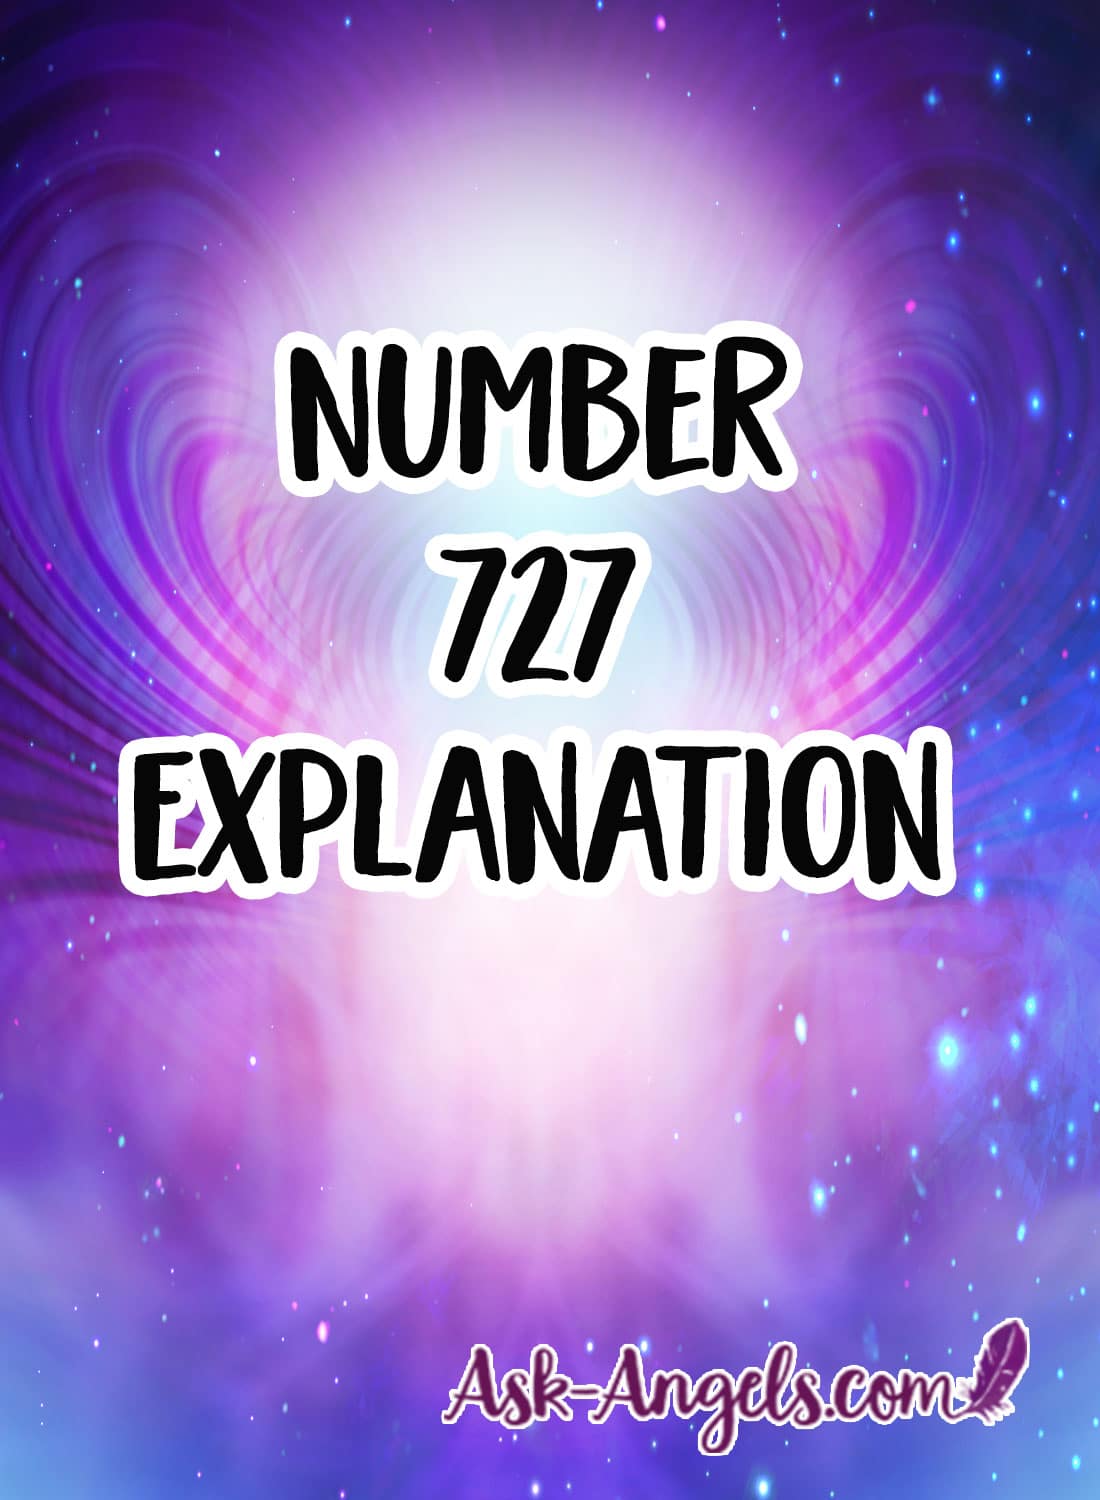  explication du nombre 727 